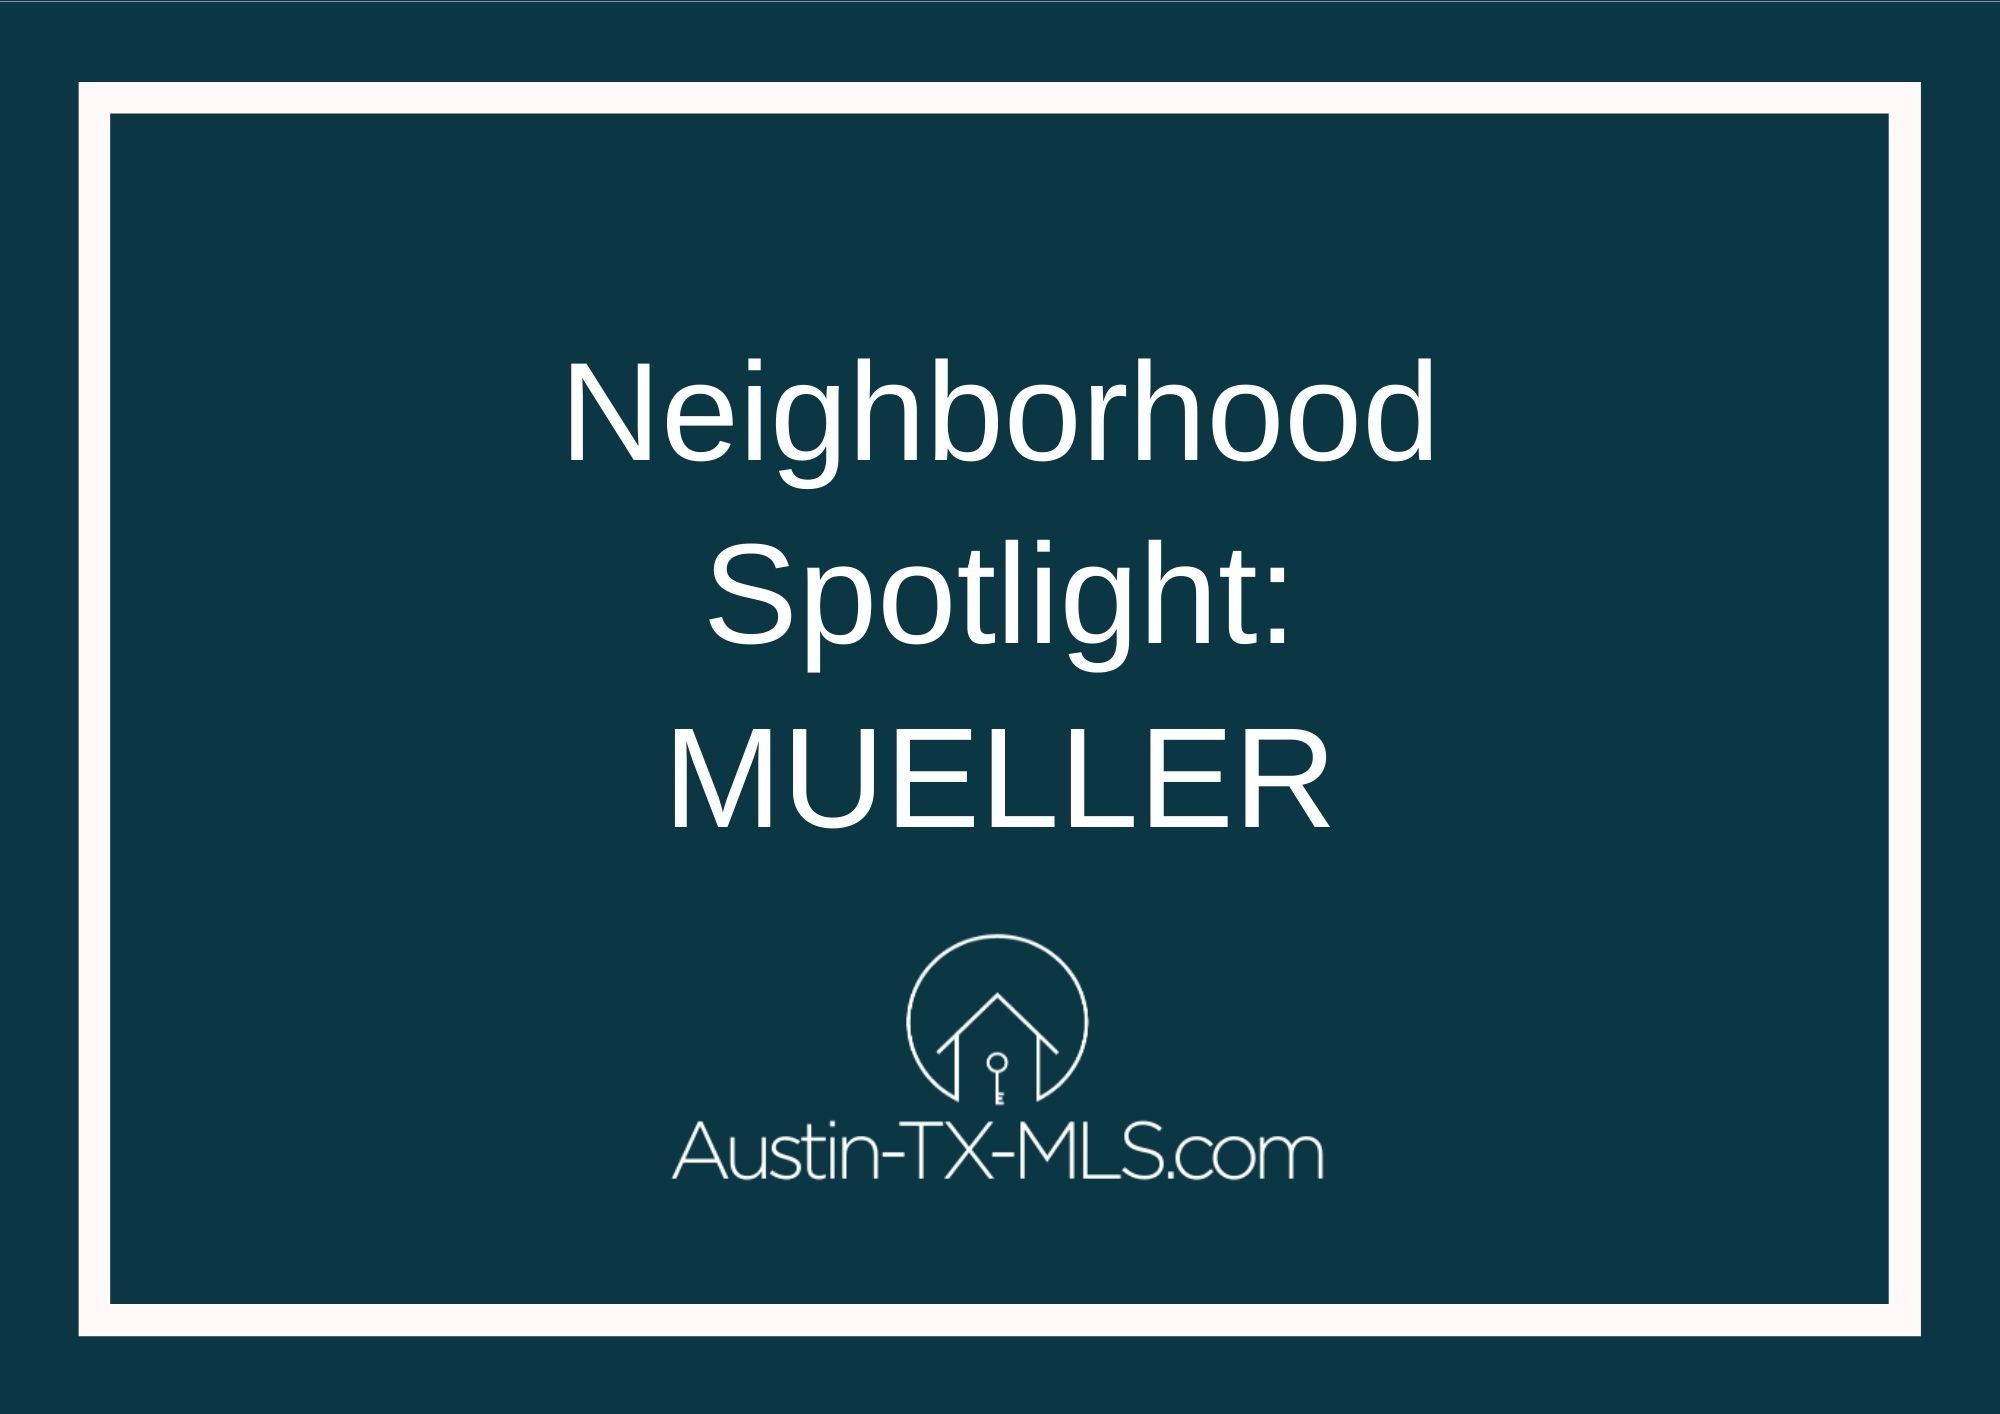 Mueller Neighborhood Spotlight Austin Texas real estate